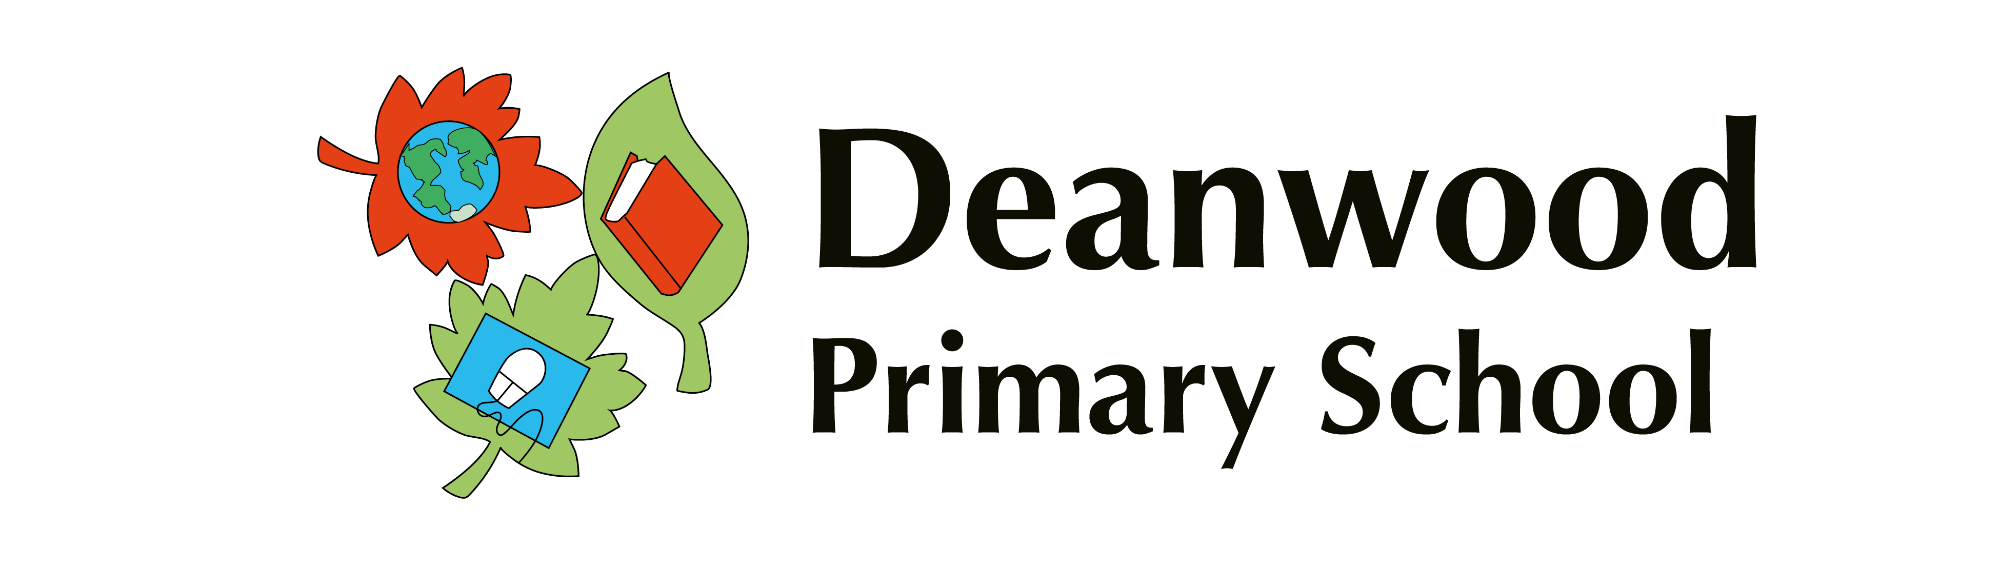 Deanwood Primary School logo